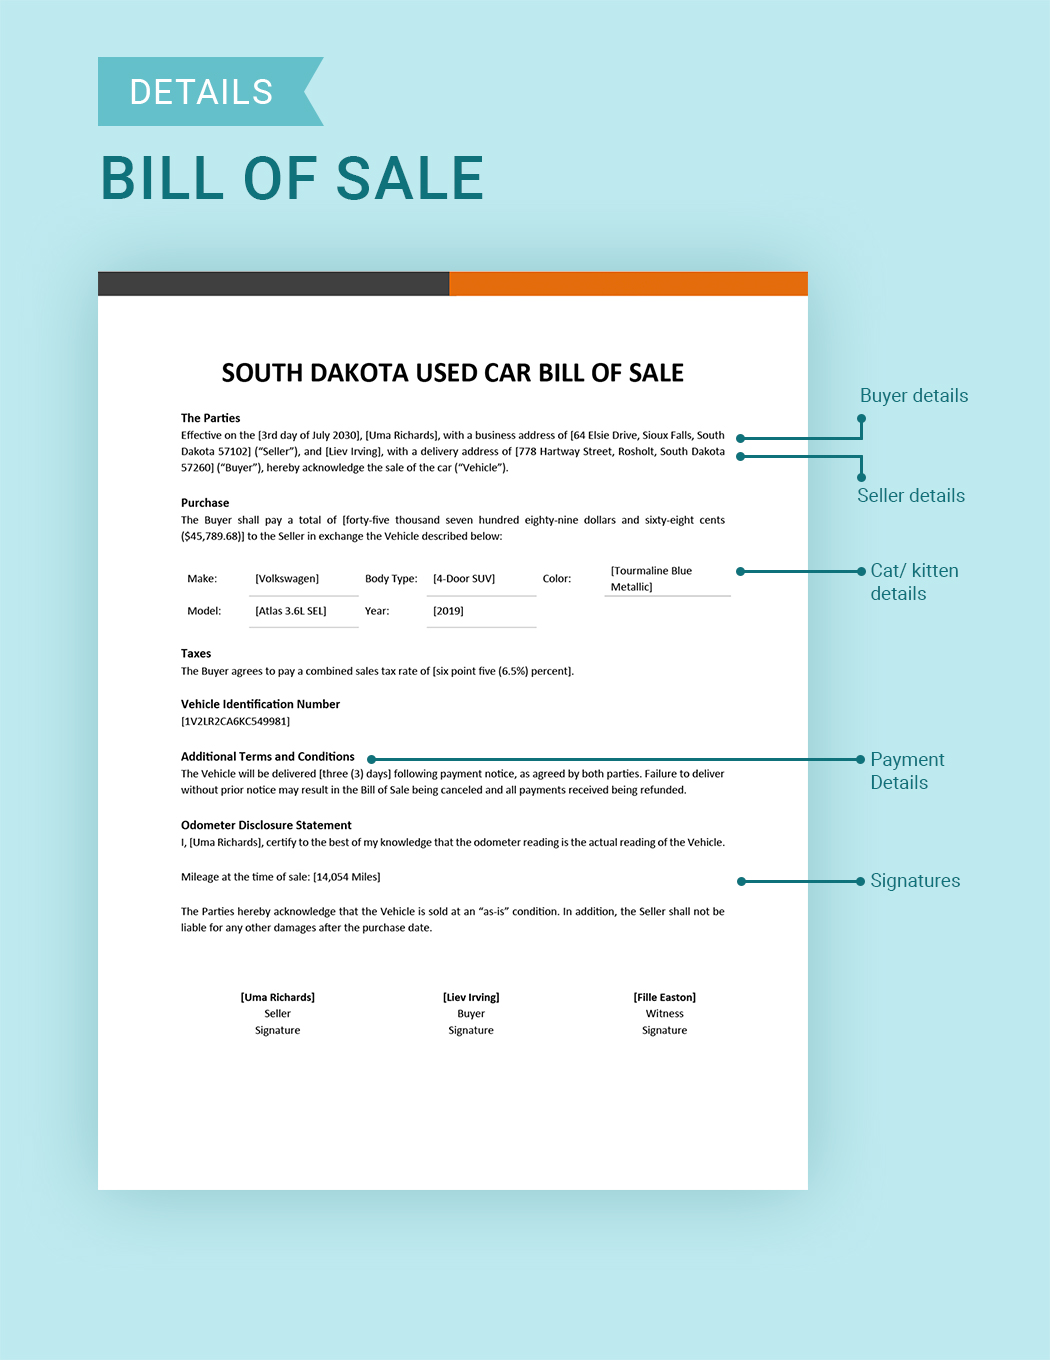 South Dakota Used Car Bill of Sale Template